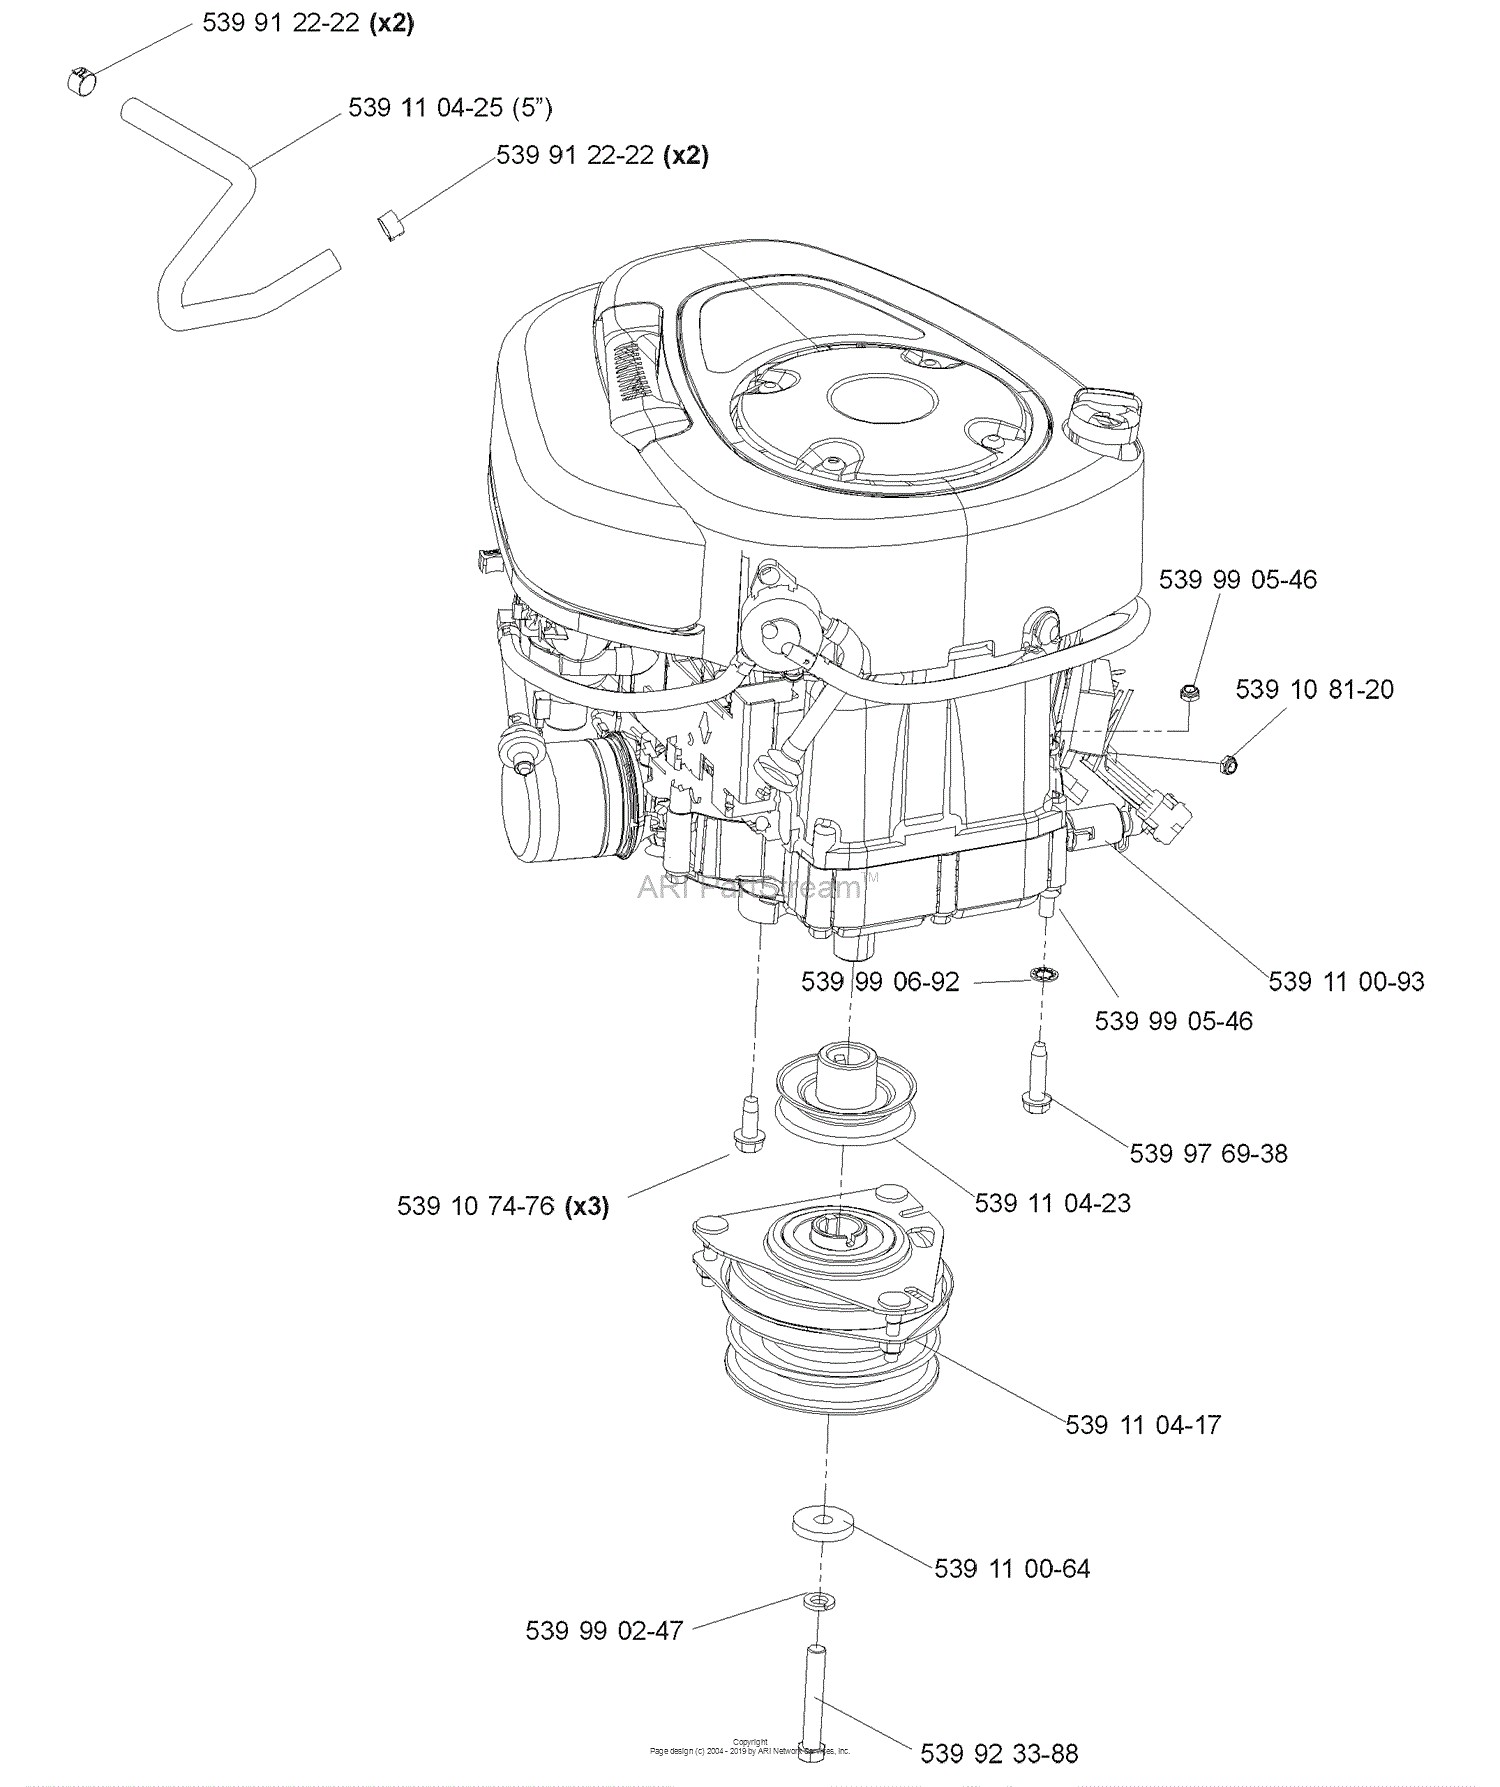 Parts for 17.5 Briggs Stratton Engine My Wiring DIagram